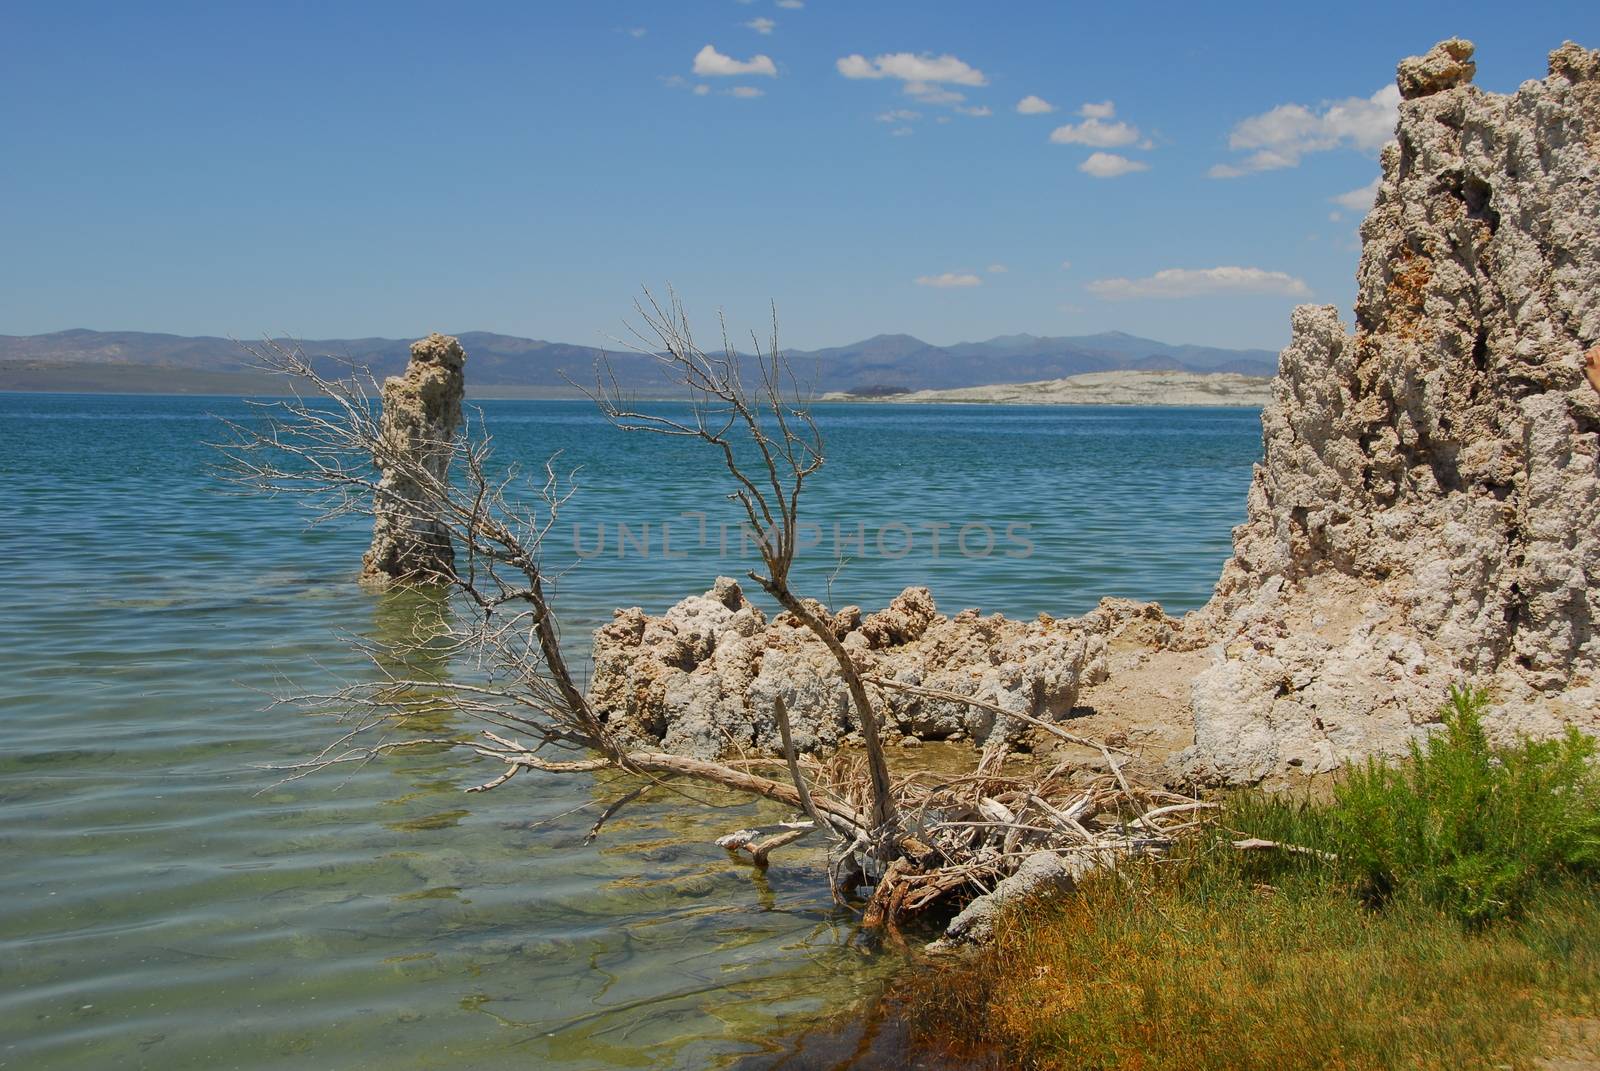 Tufas rocks made of calcium carbonate deposits at Mono Lake California,USA